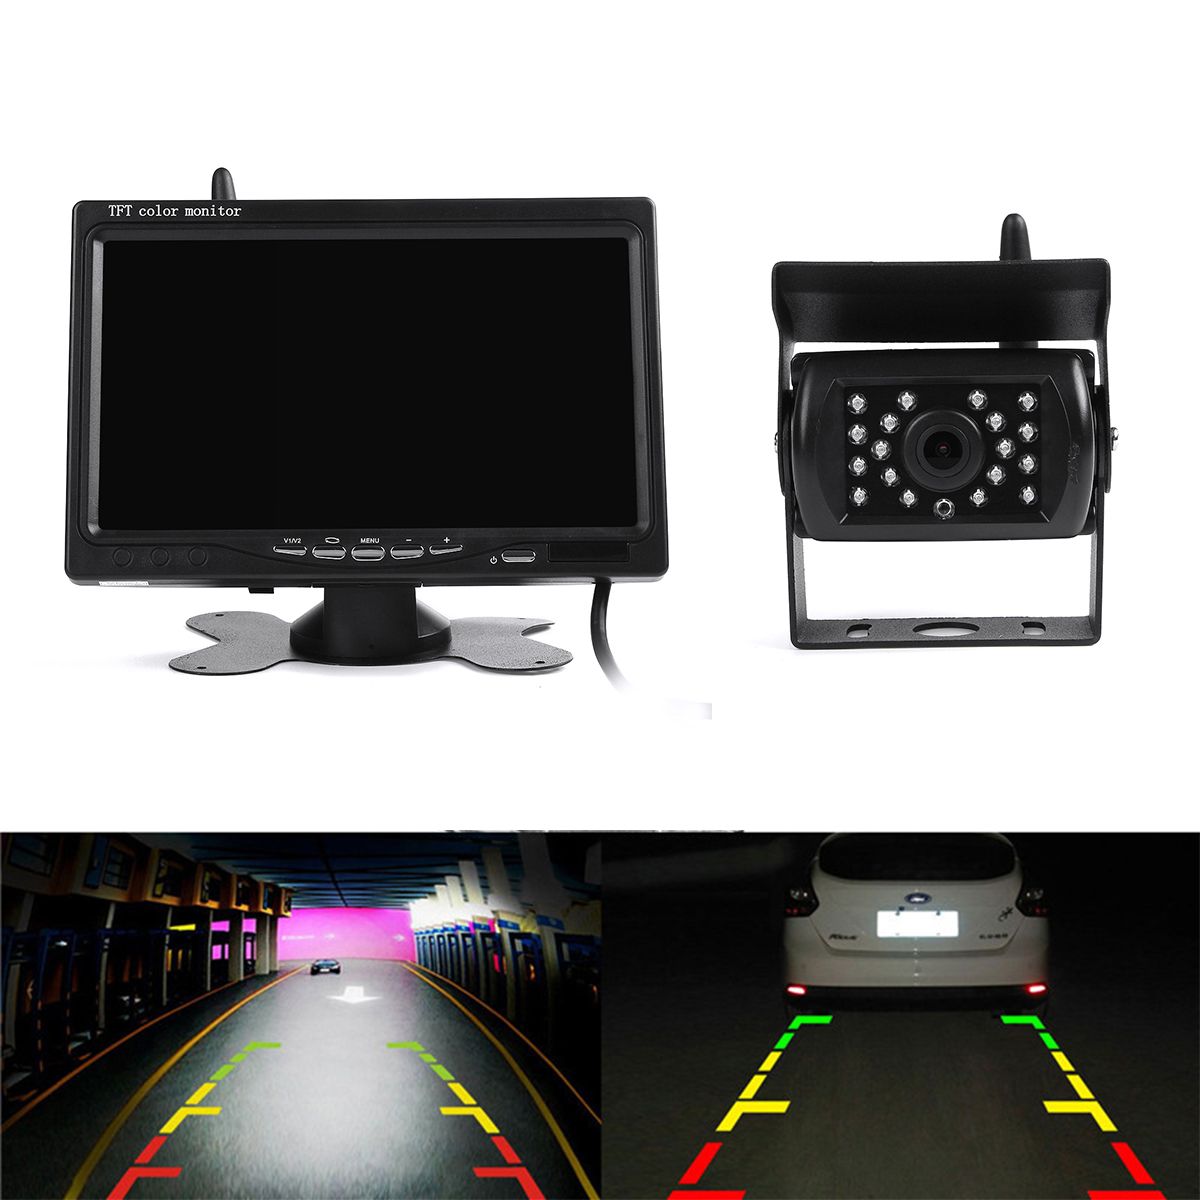 7-Inch-TFT-LCD-Car-Rear-View-Monitor-With-PAL-NTSC-120deg-Wide-View-Angle-Night-Vision-LED-Backup-Ca-1769586